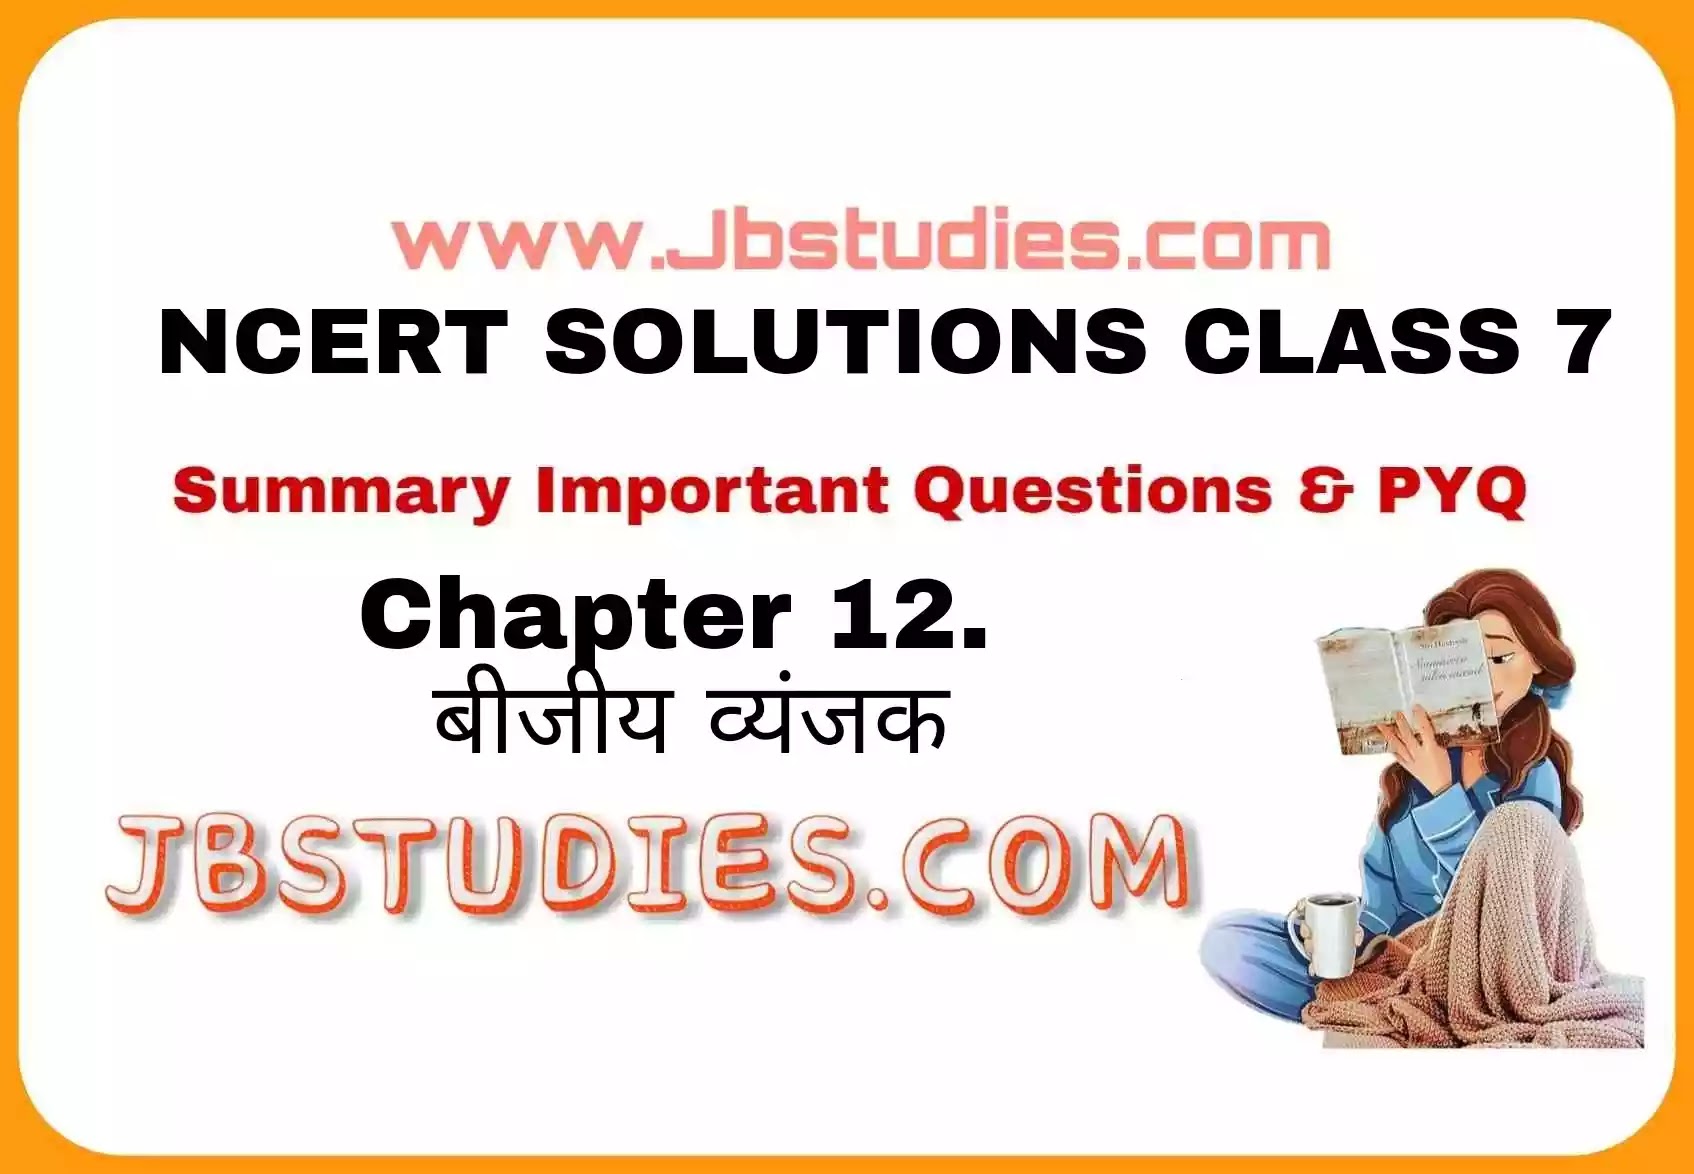 Solutions Class 7 गणित Chapter-12 (बीजीय व्यंजक)